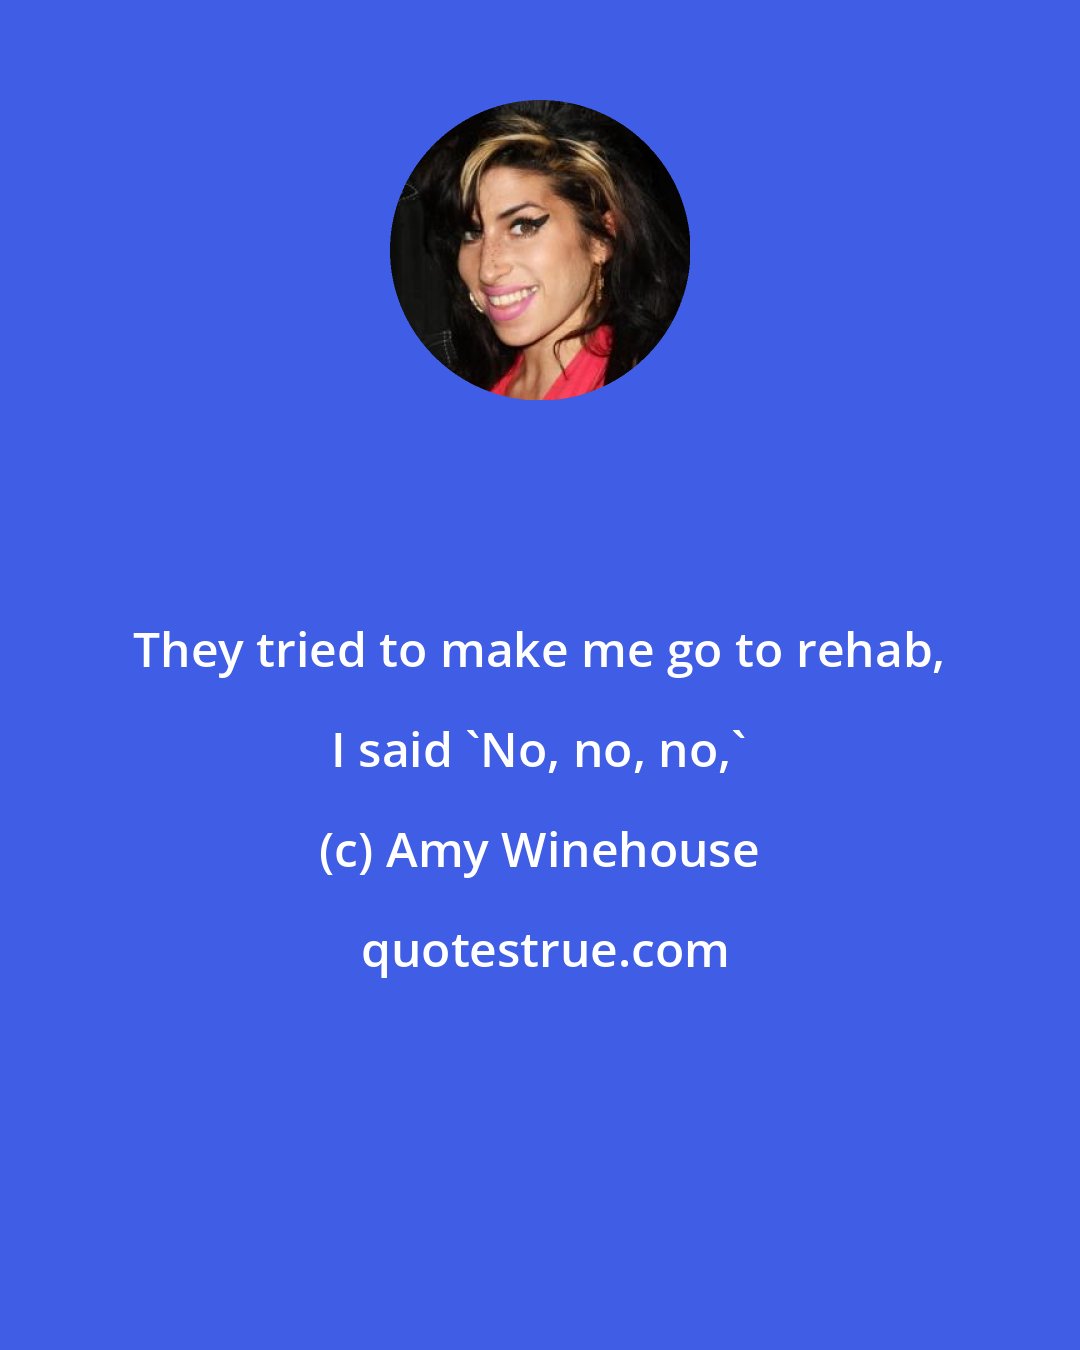 Amy Winehouse: They tried to make me go to rehab, I said 'No, no, no,'